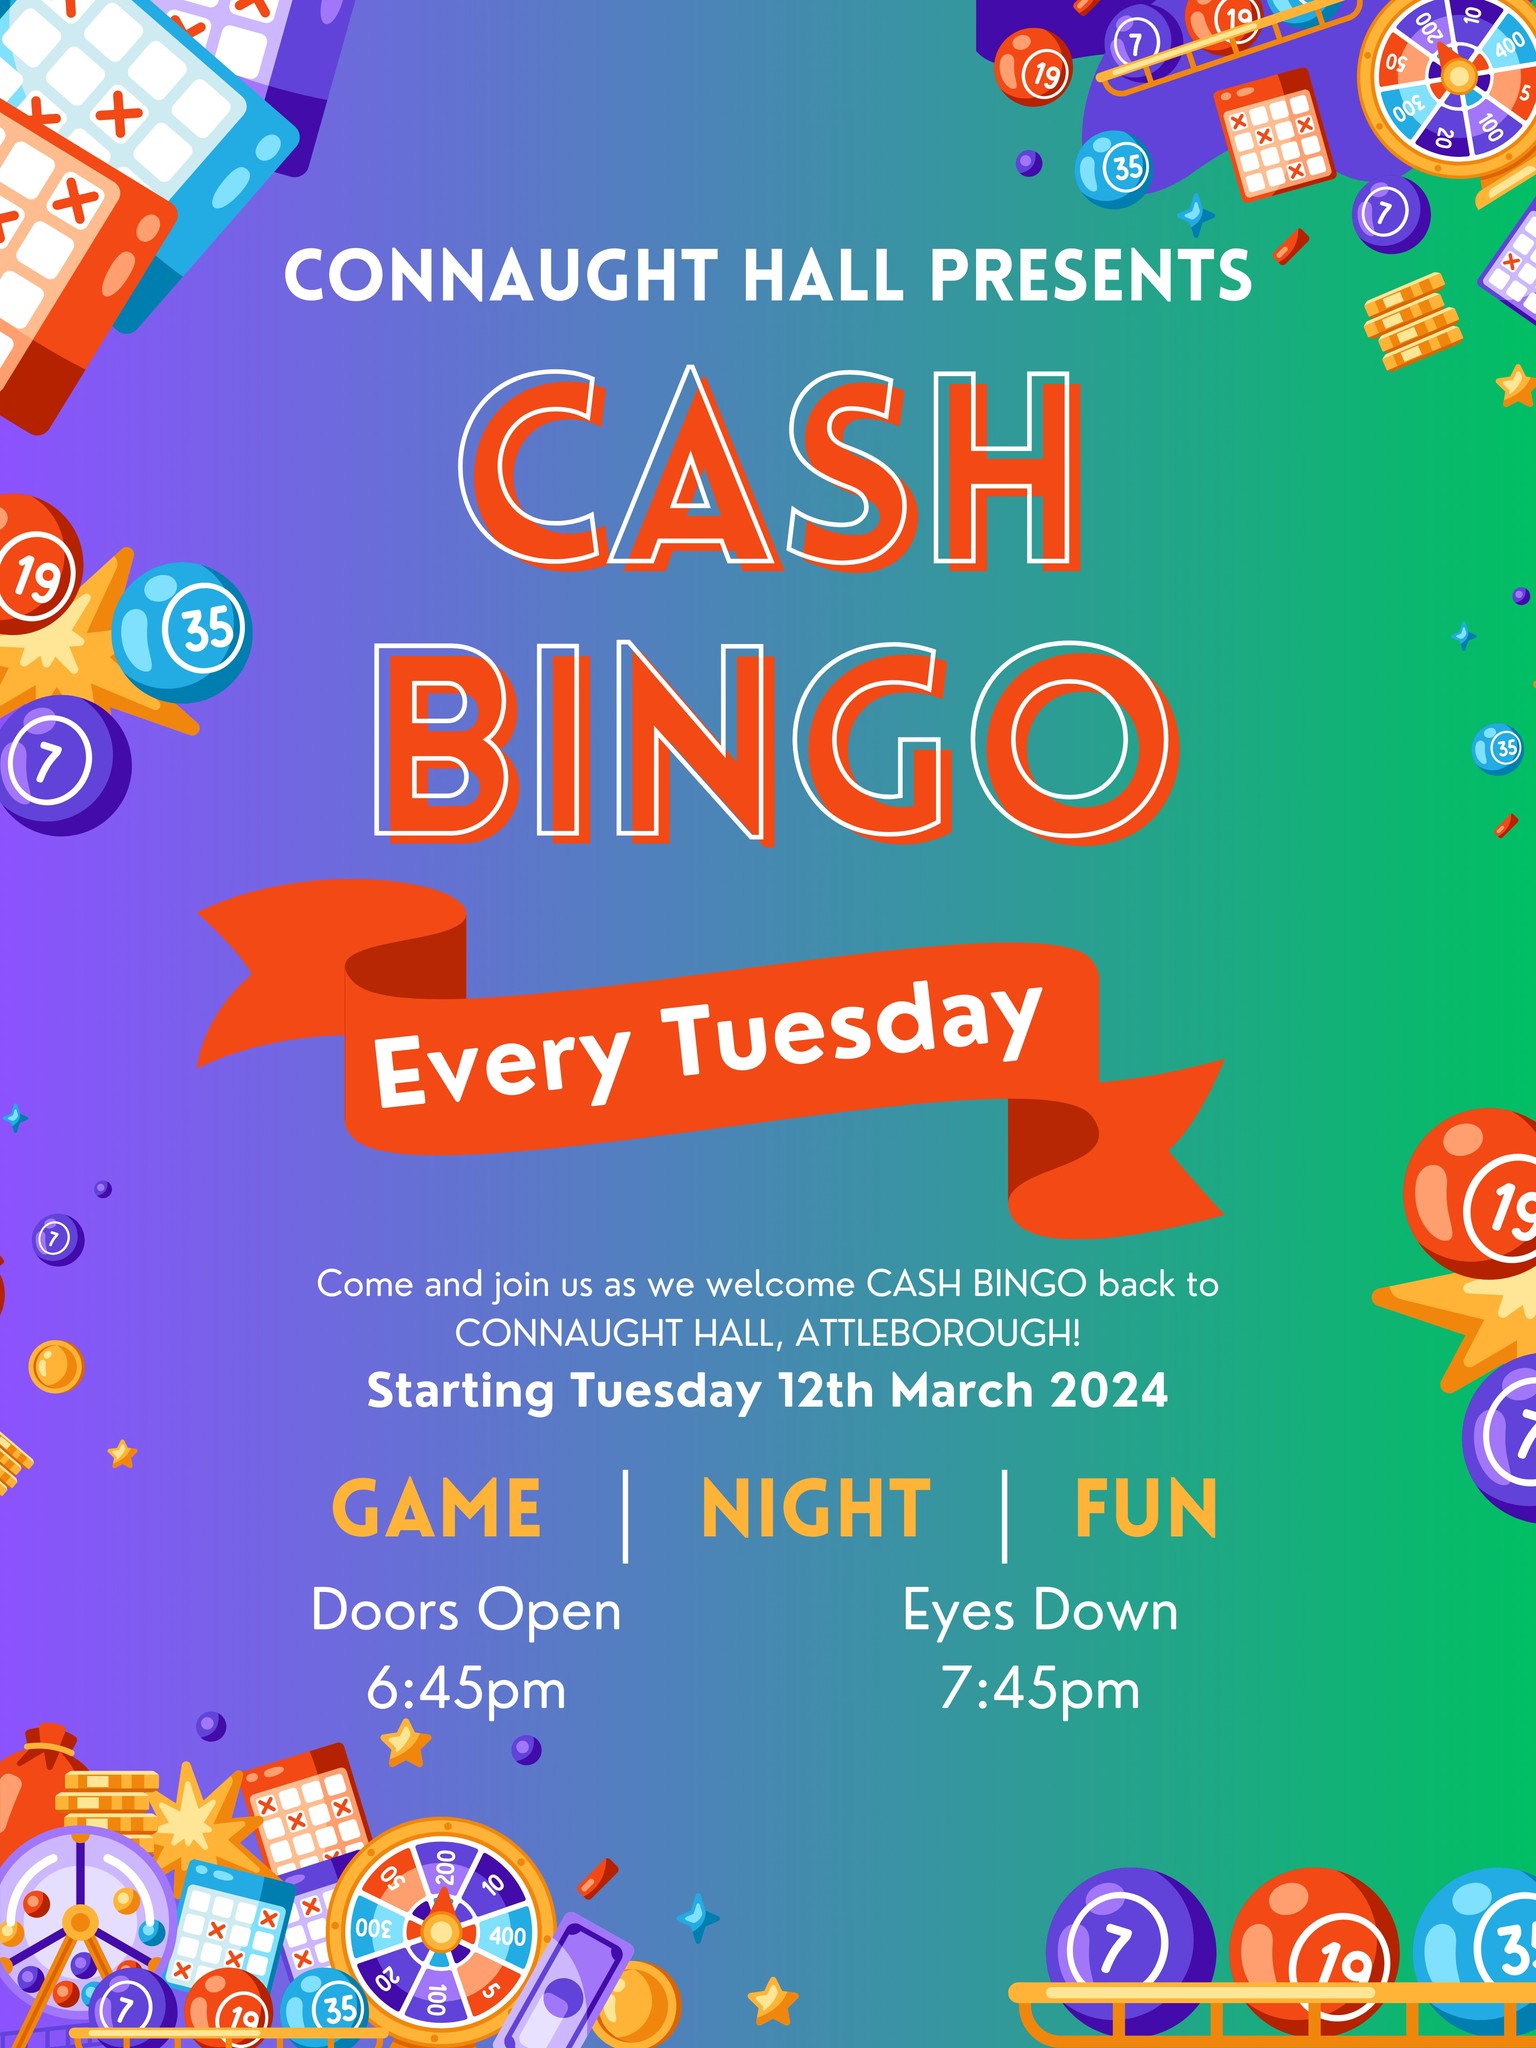 Cash Bingo – Connaught Hall, Attleborough, Every Tuesday